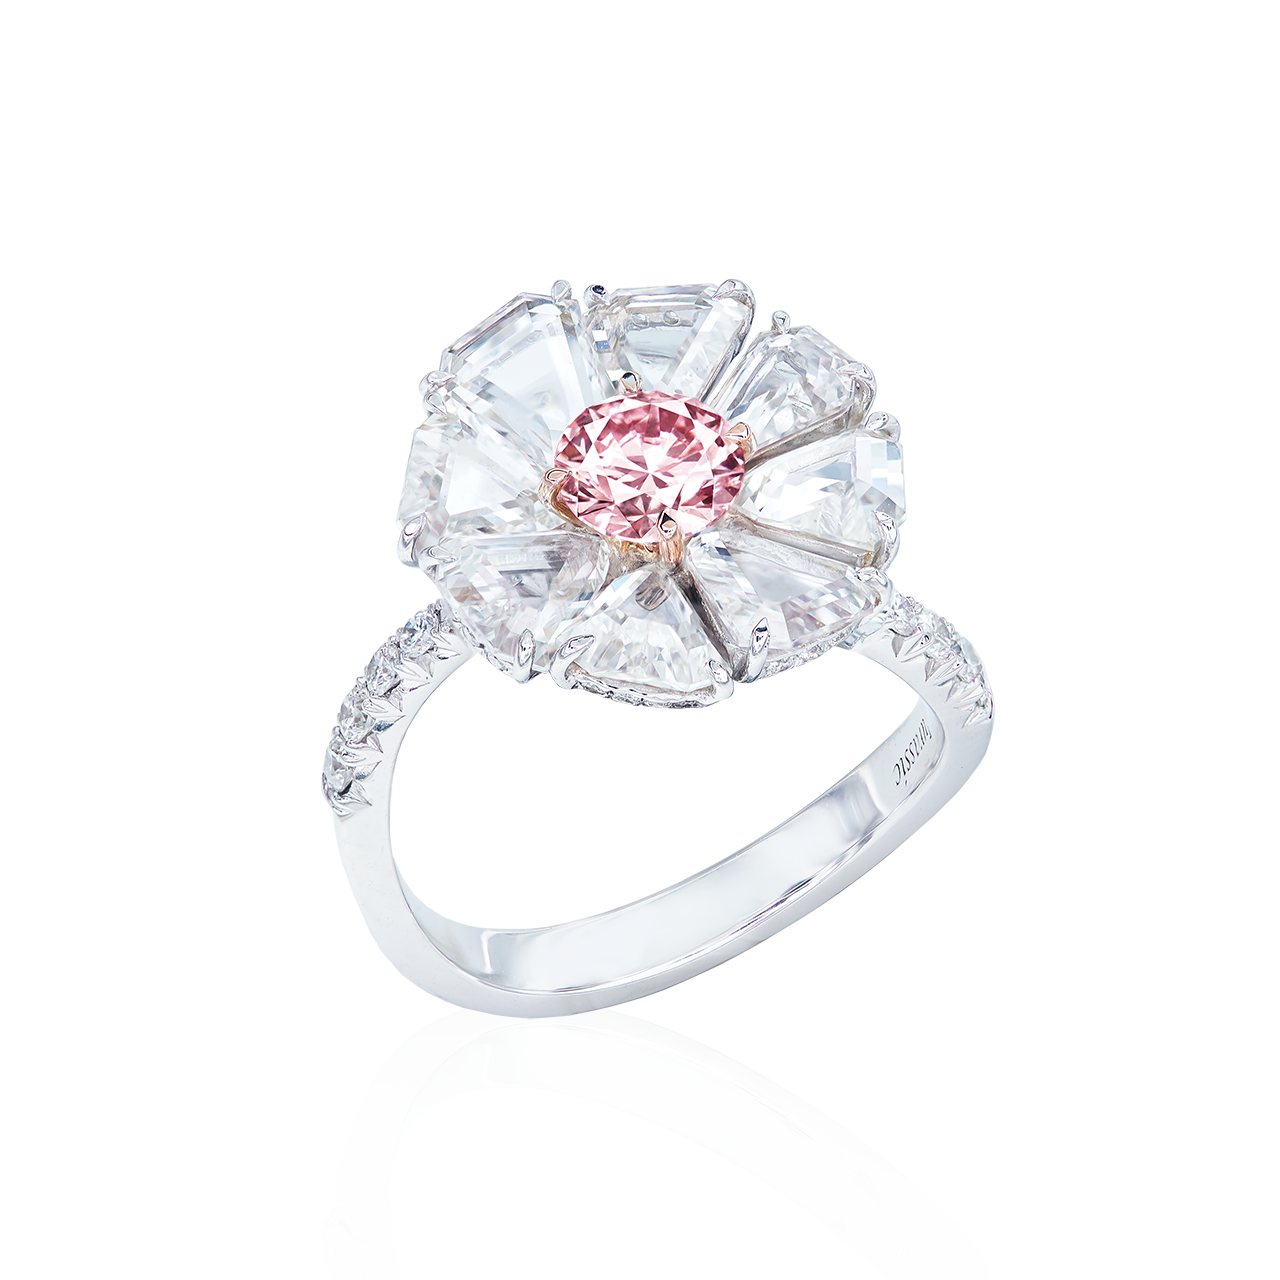 0.69克拉 阿蓋爾粉鑽鑽戒
Pink Diamond from Argyle Mine 
and Diamond Ring